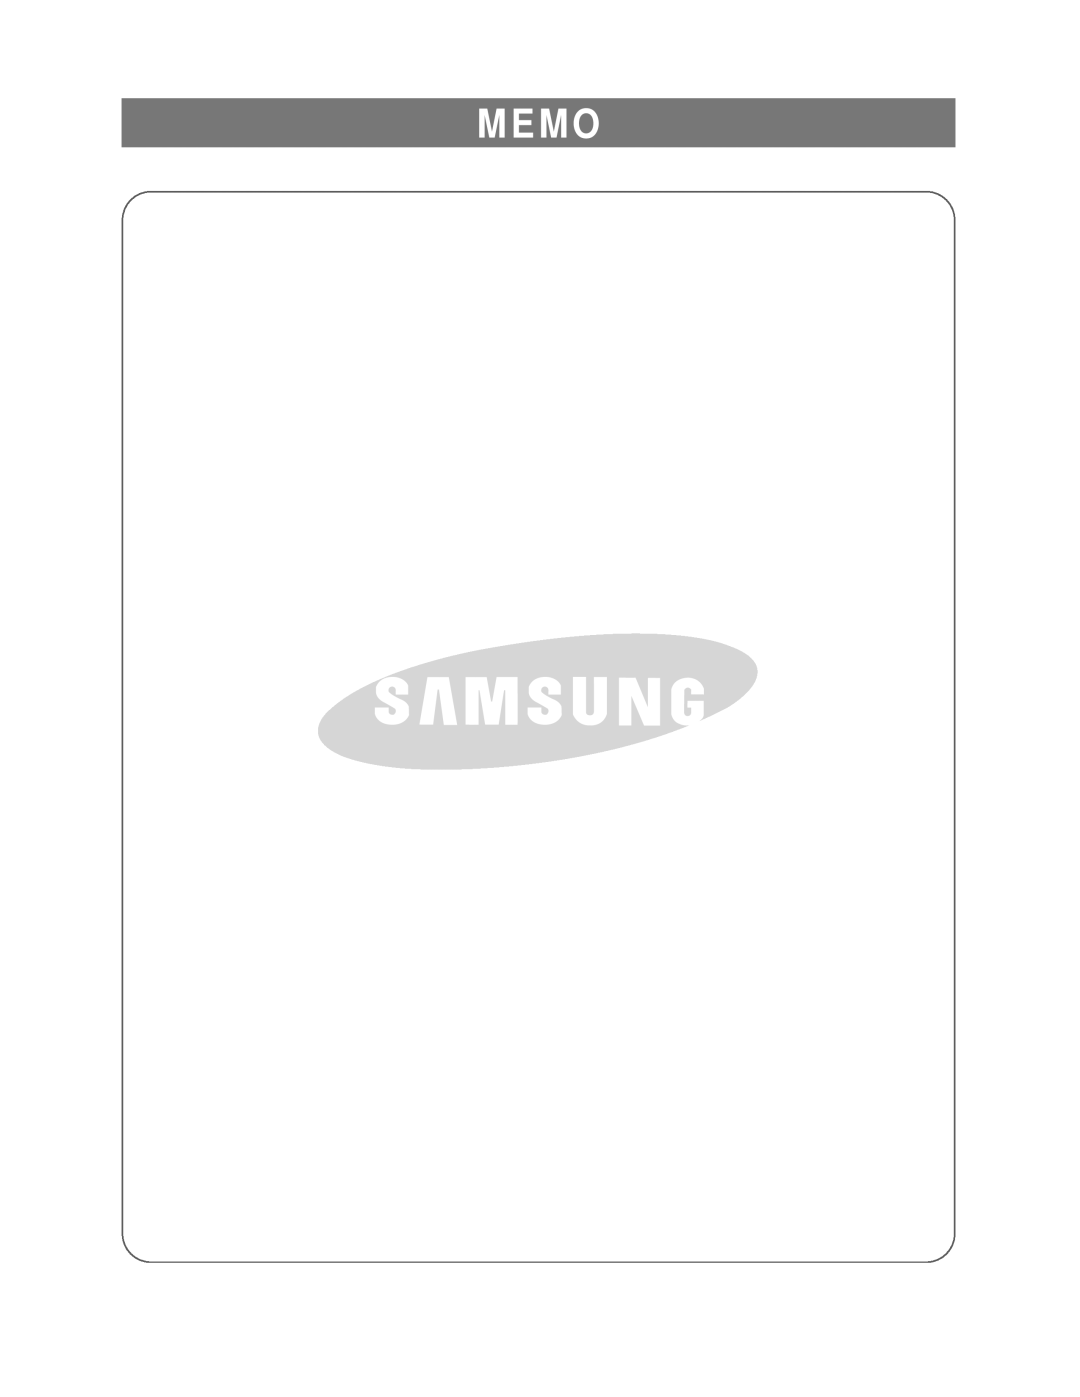 Samsung DA99-00926B owner manual M E M O 